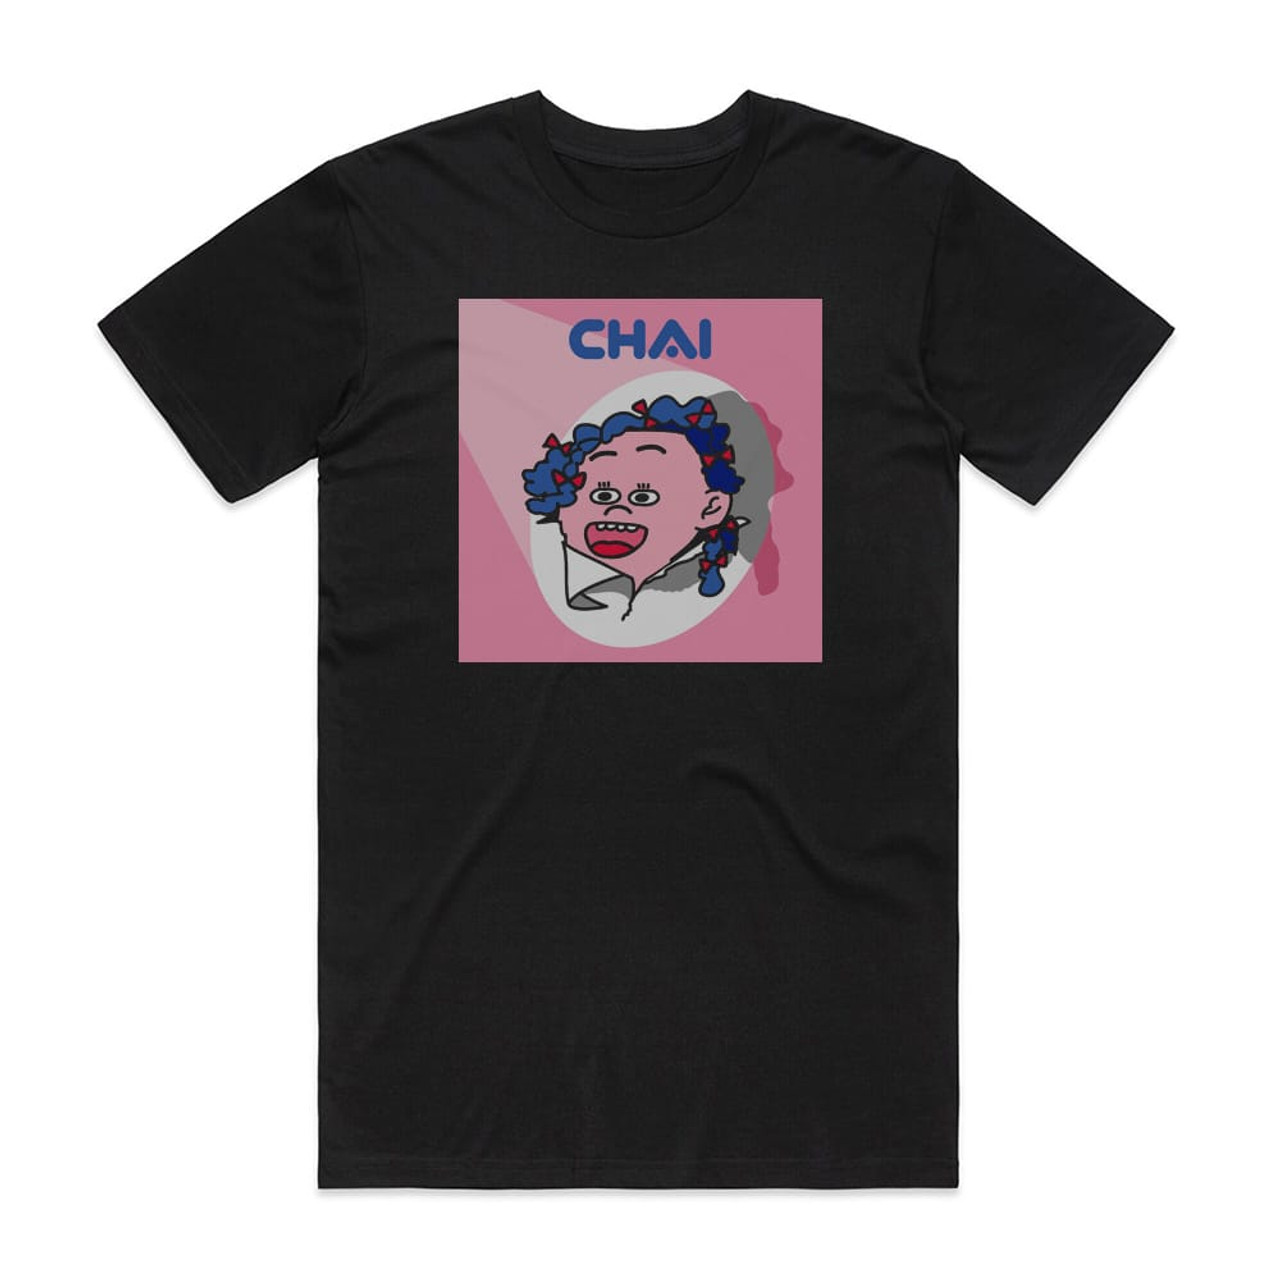 CHAI Punk Album Cover T-Shirt Black